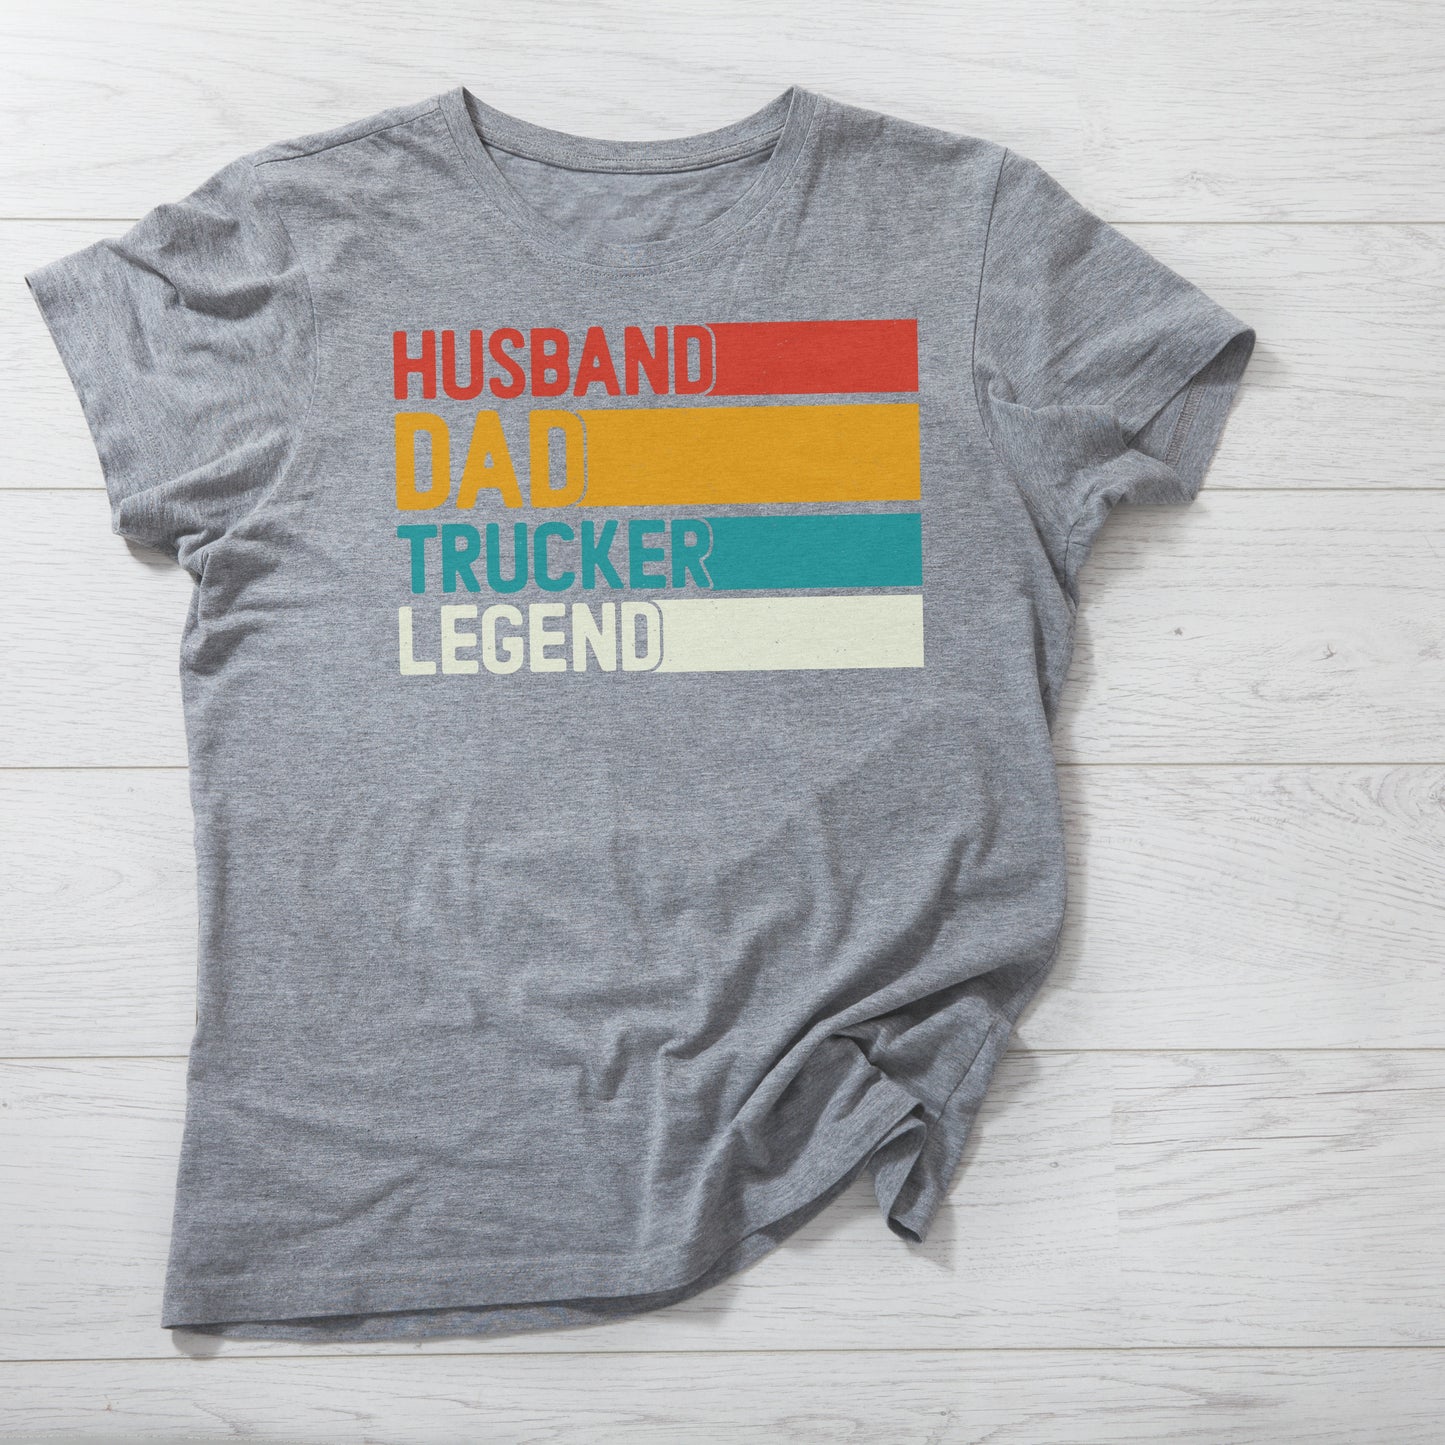 shirt says, Husband Dad Trucker Legend, trucker shirt, dark heather